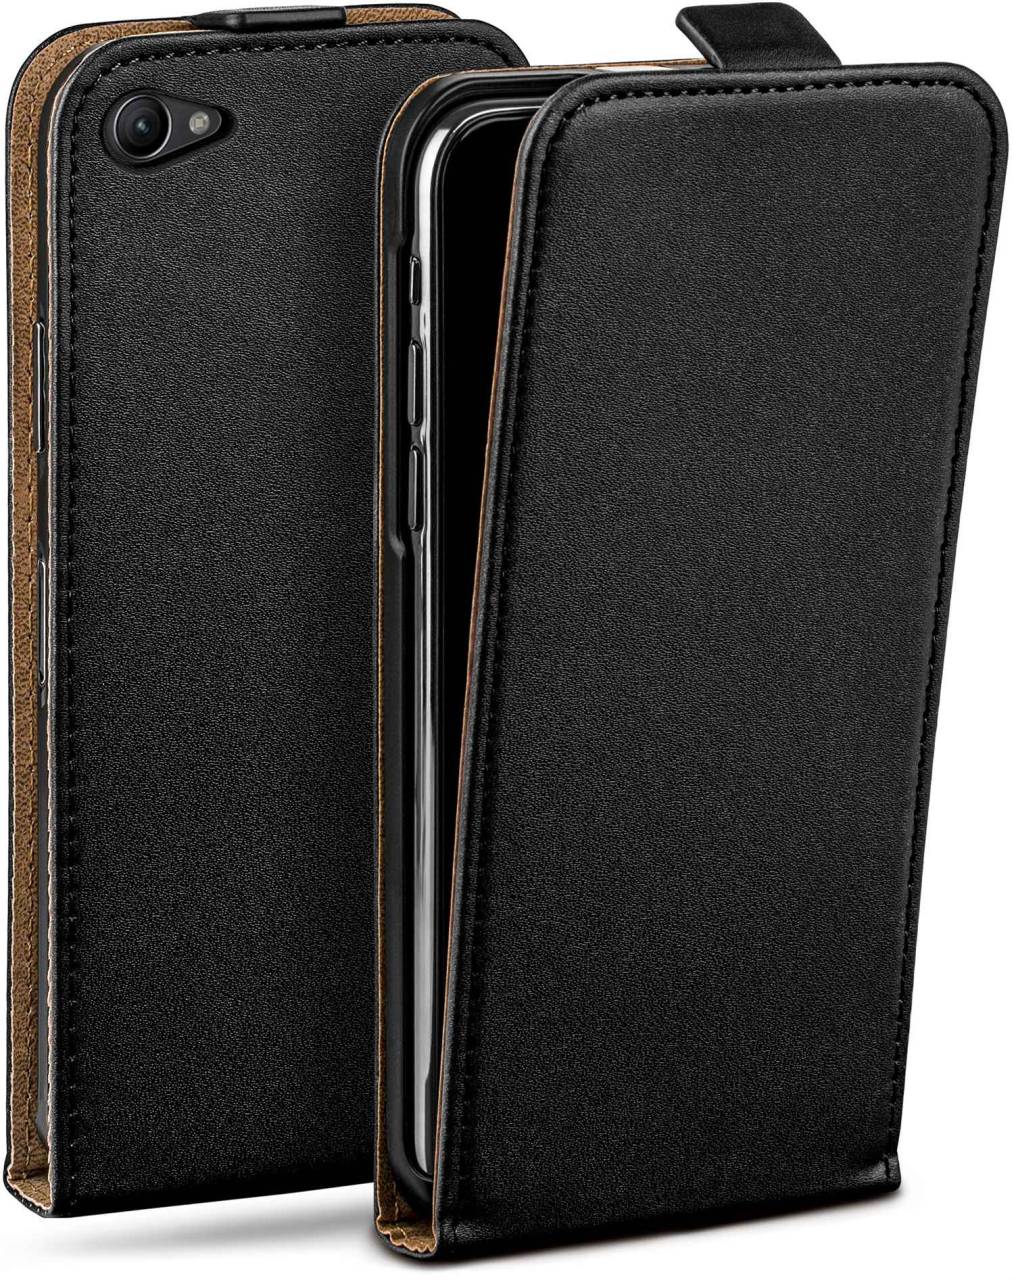 Antagonist Weg Bijbel Flip Case für Sony Xperia Z1 Compact – Leder Handyhülle ▷ hulle24